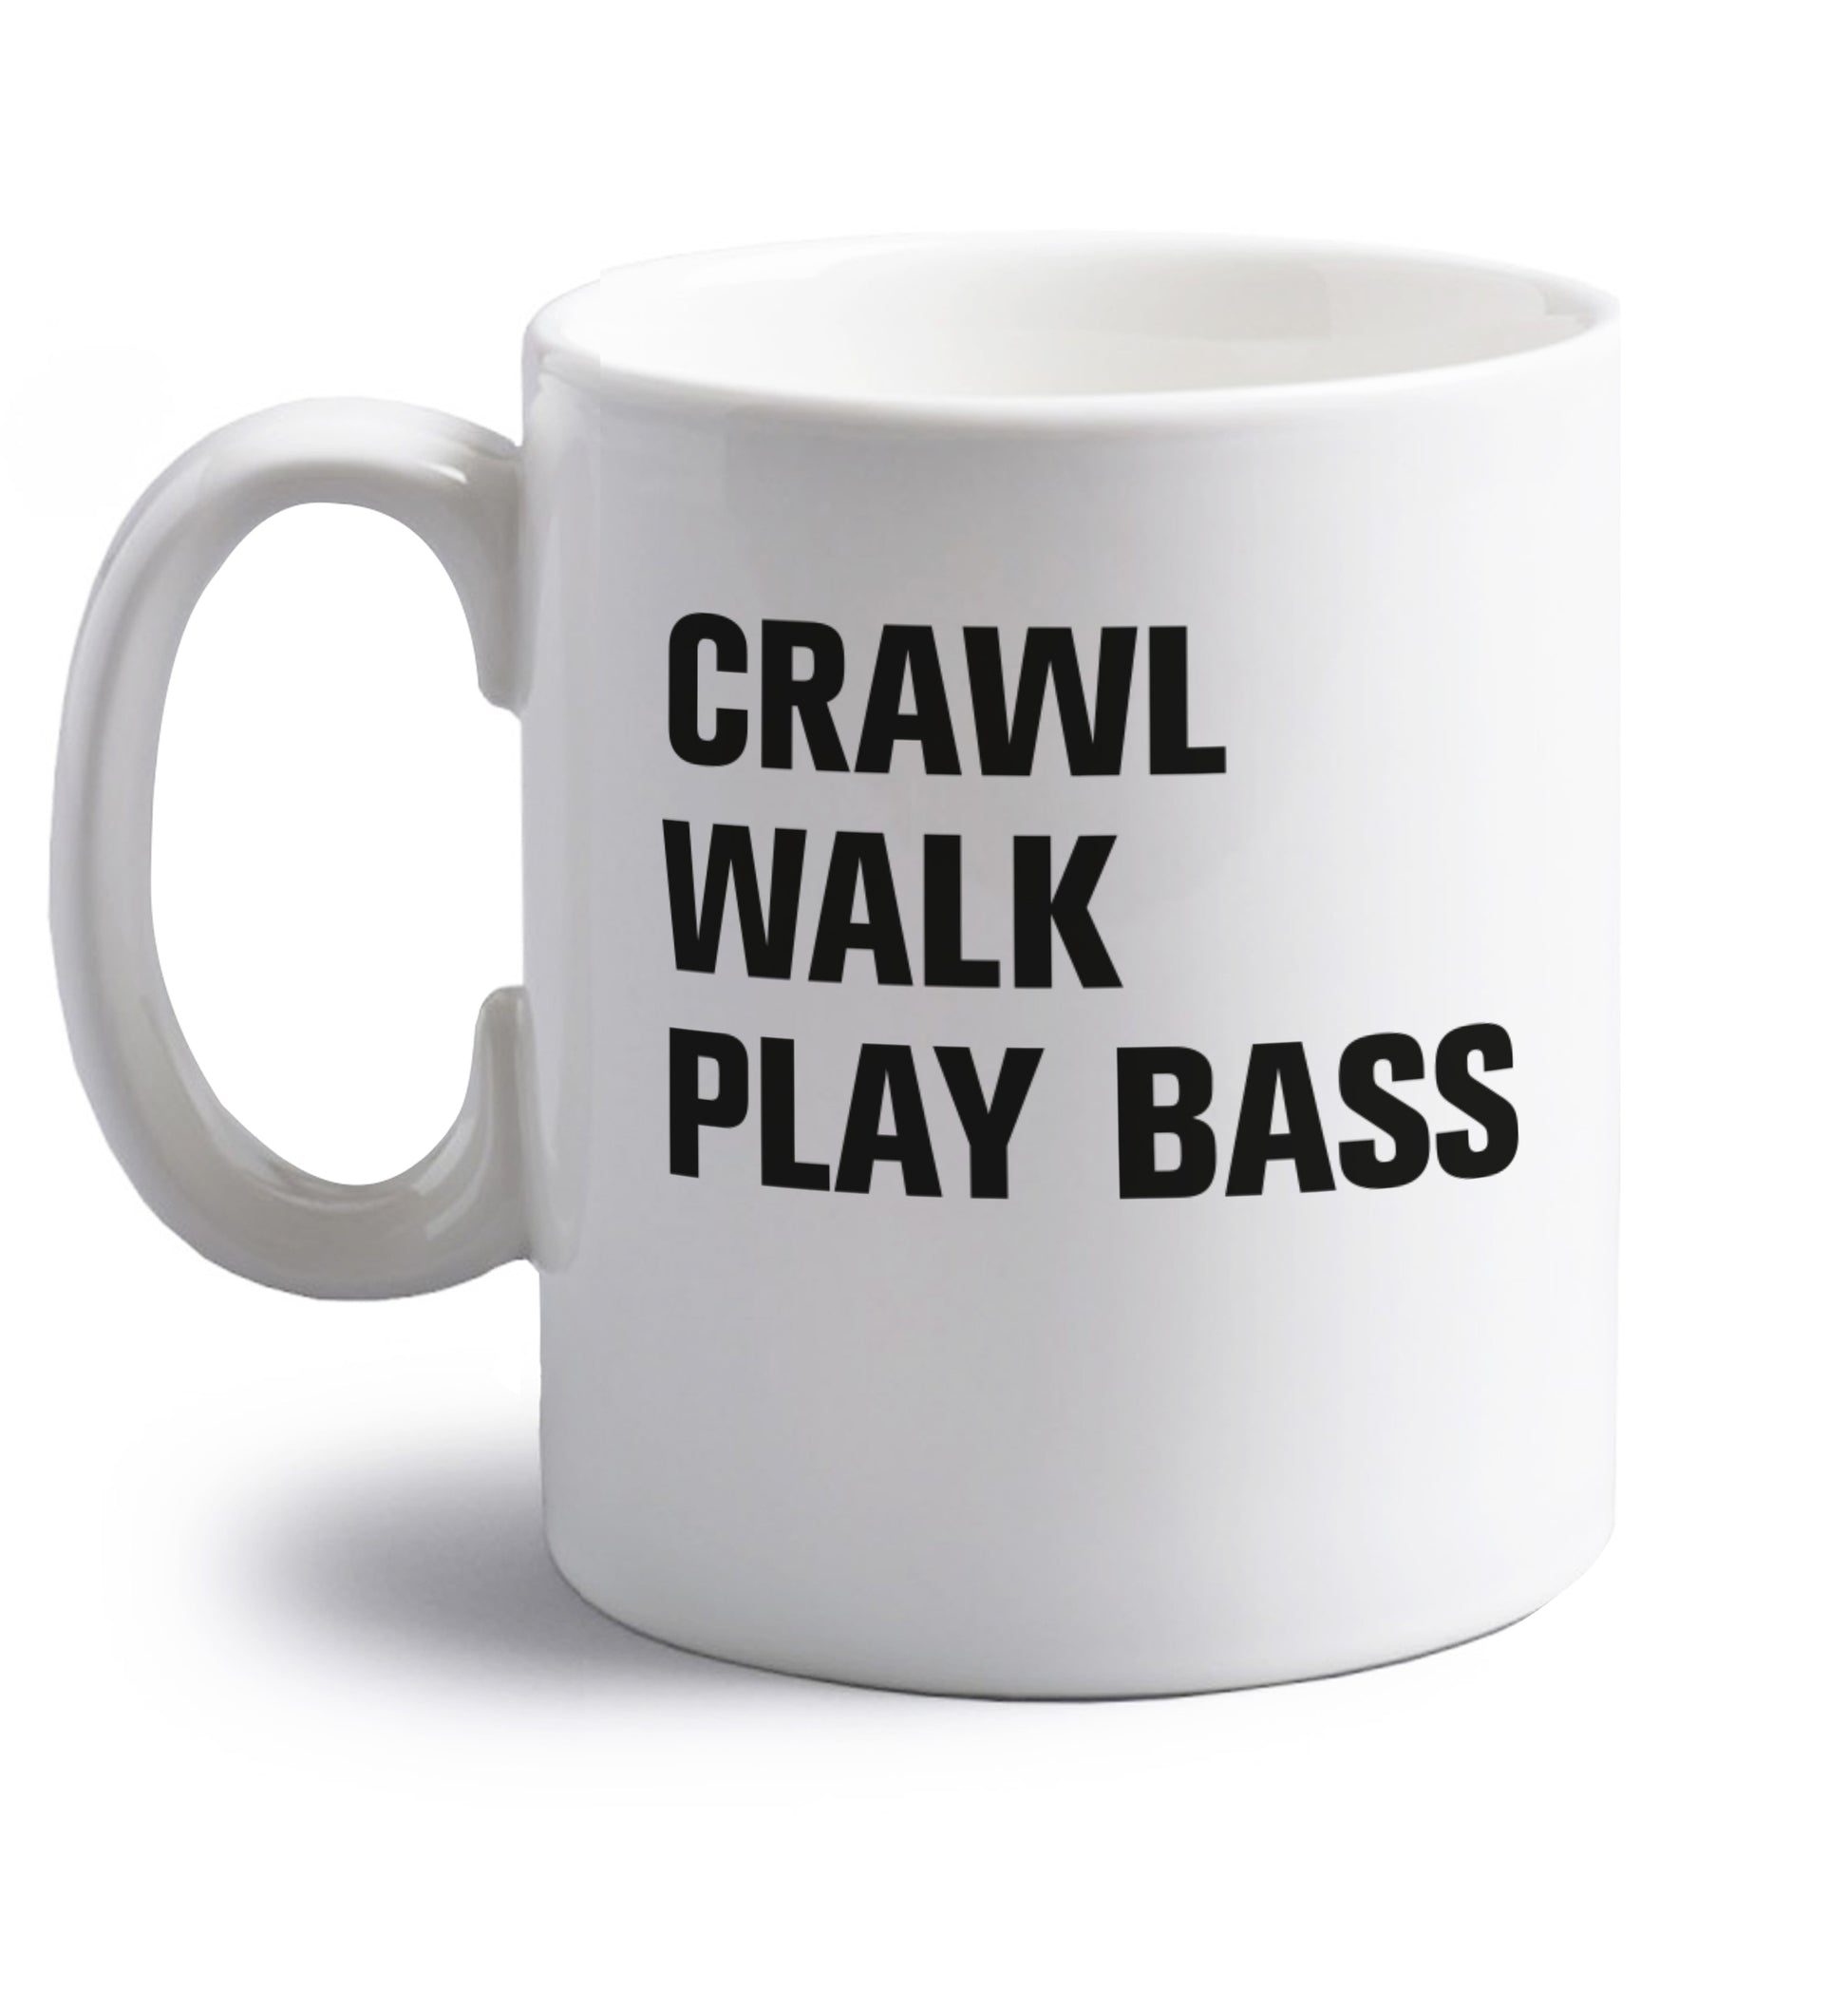 Crawl Walk Play Bass right handed white ceramic mug 